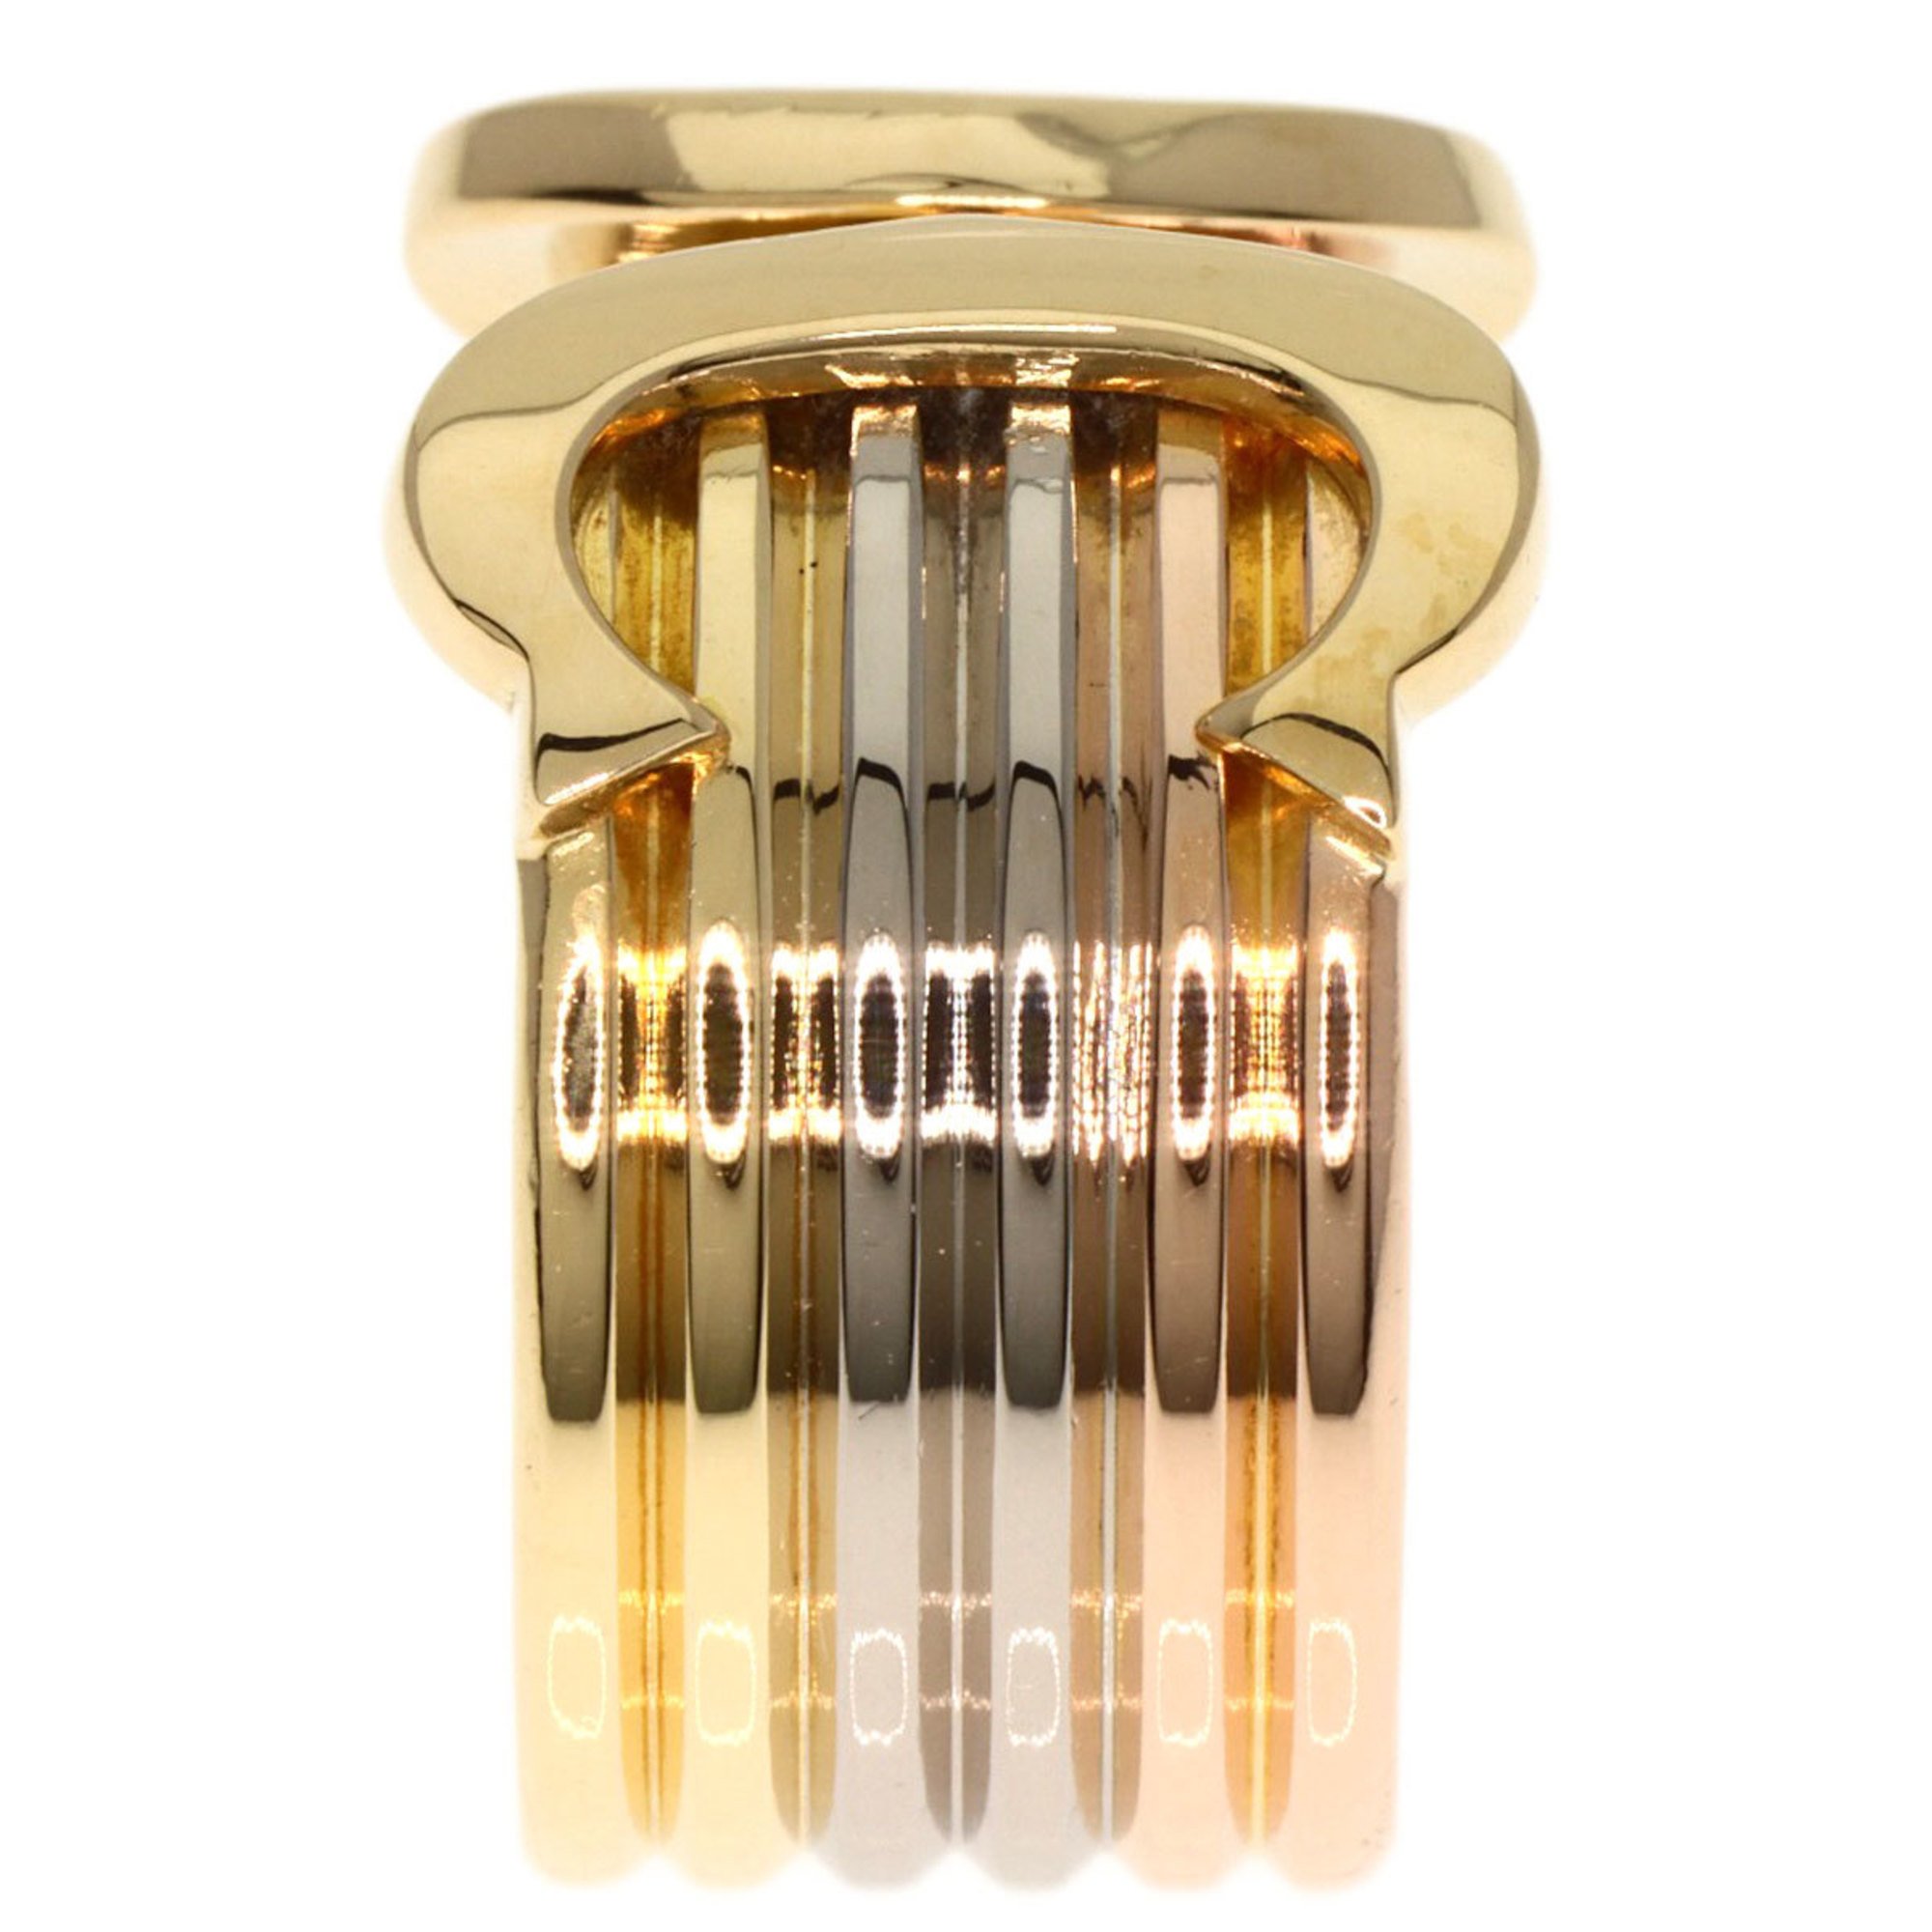 Cartier 2C LM #55 Ring, K18 Yellow Gold, K18WG, K18PG, Women's